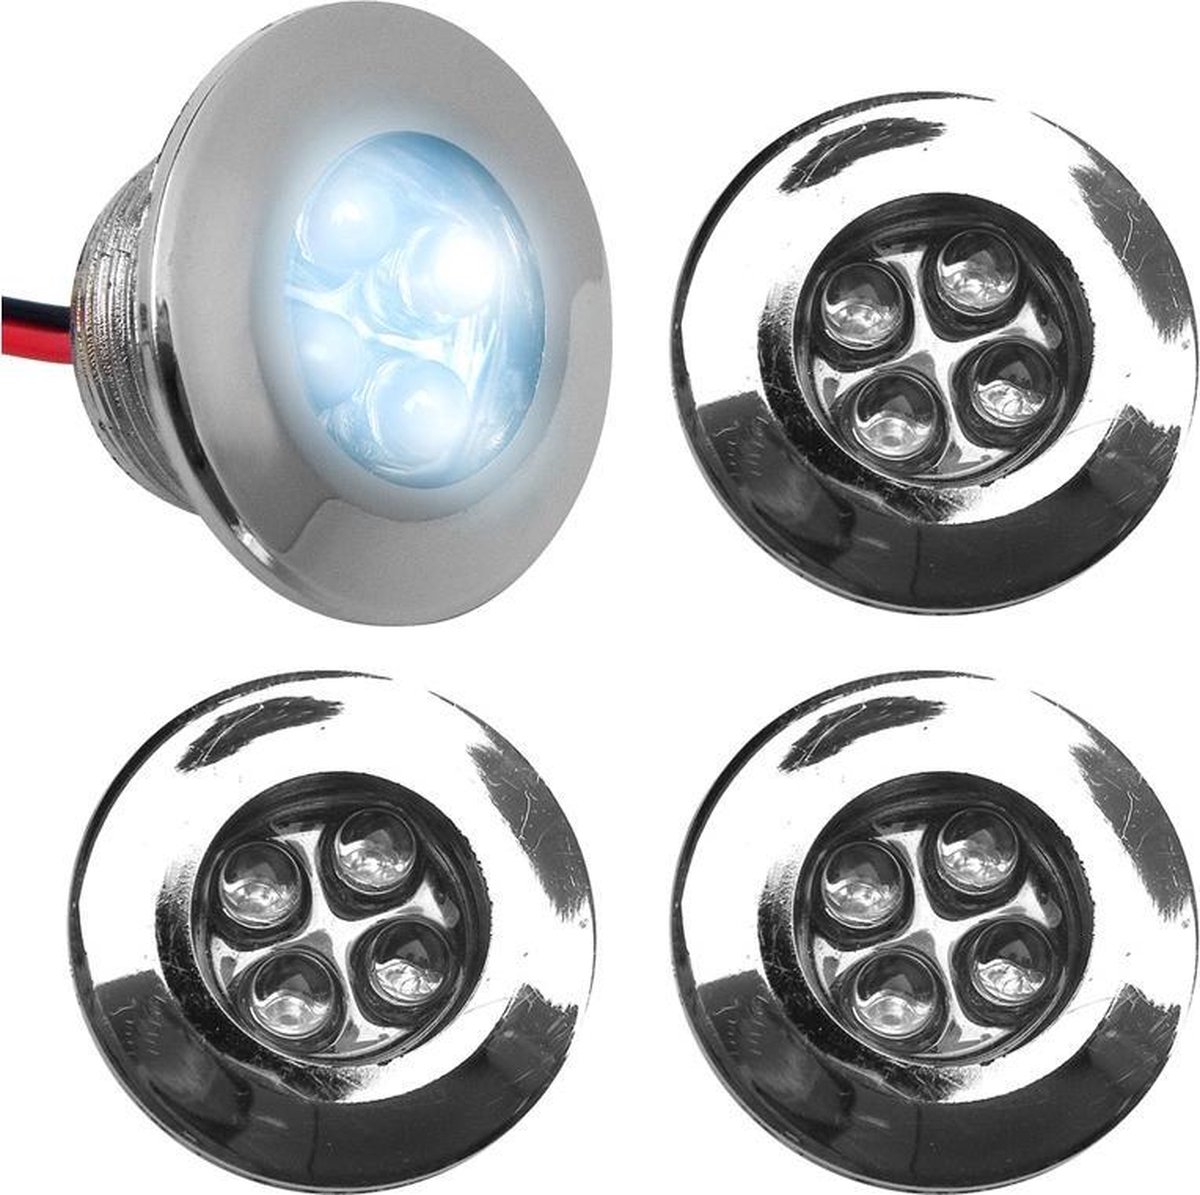 Simoni Racing Exterieur LEDs - Wit - Buitendiameter 31mm / Inbouwmaat 22mm - Set à 4 stuks